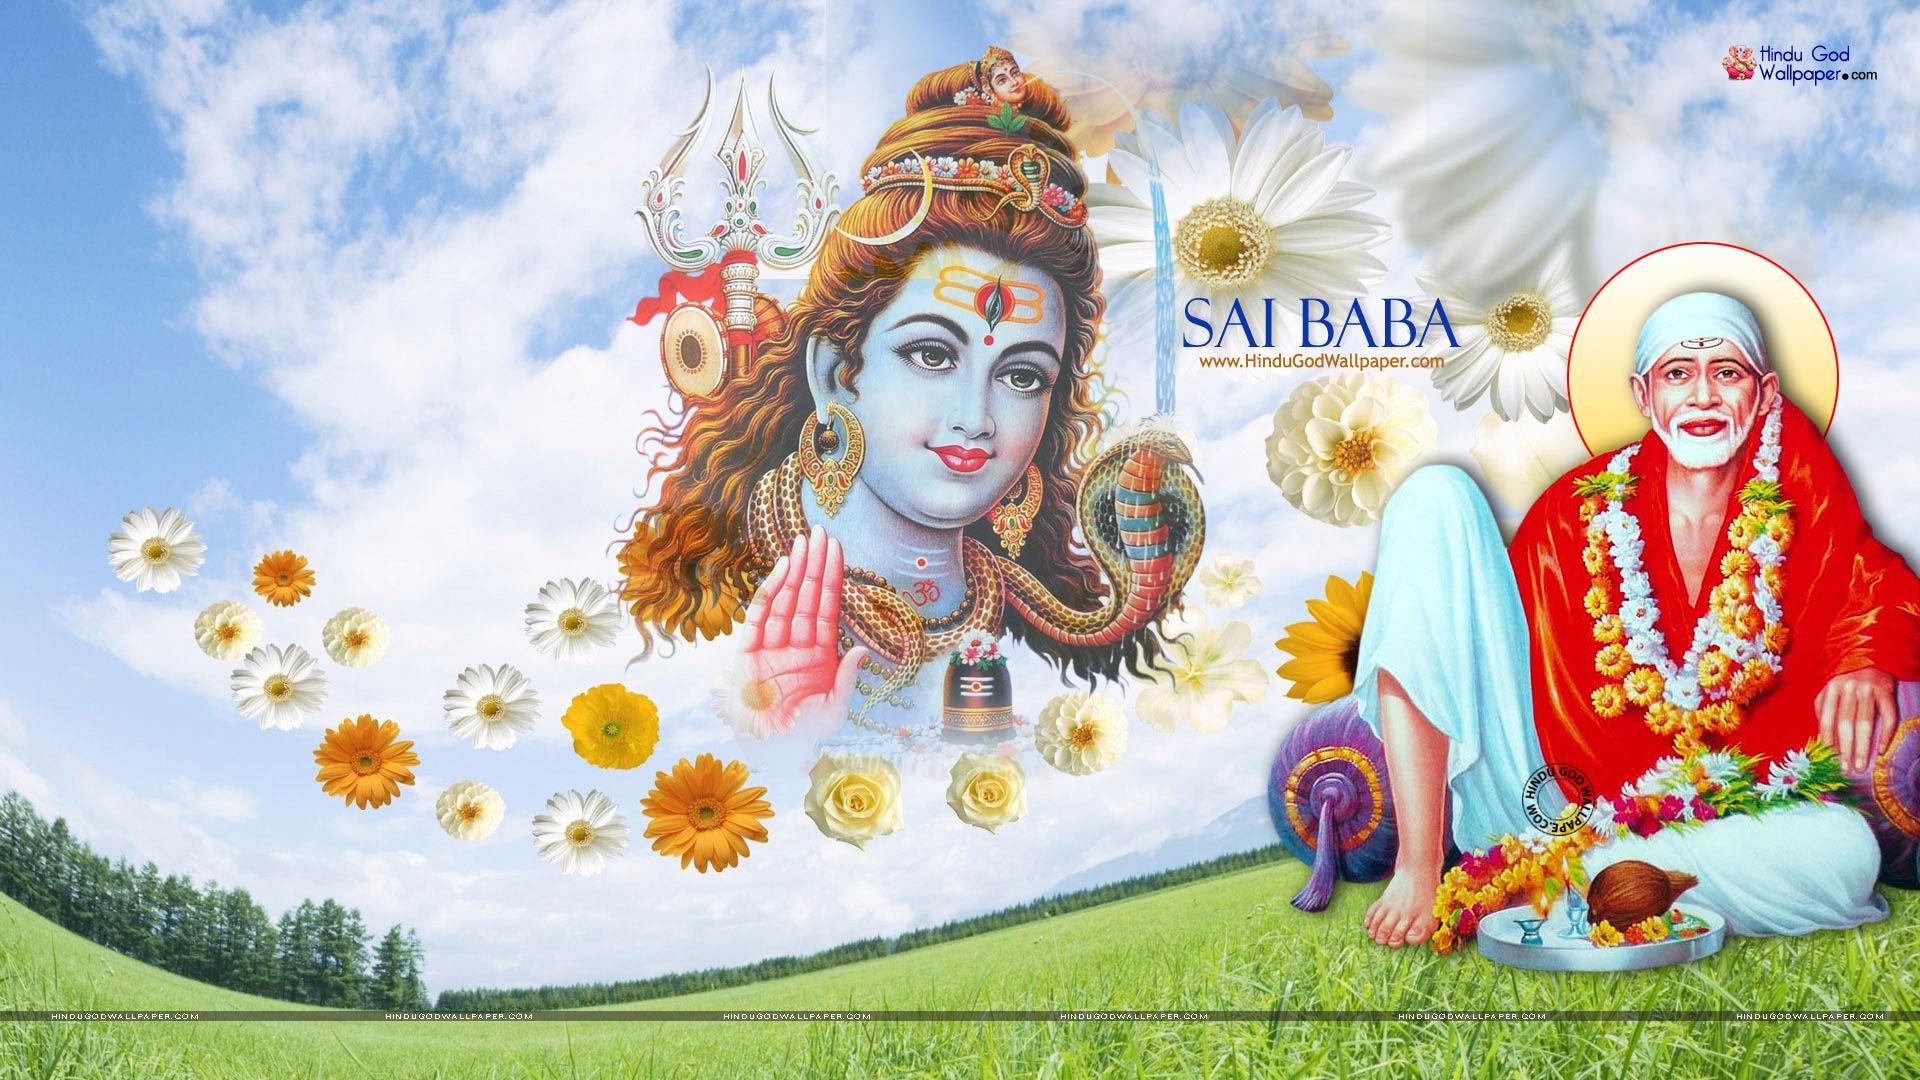 1080p Sai Baba HD Wallpaper Image Full Size Free Download